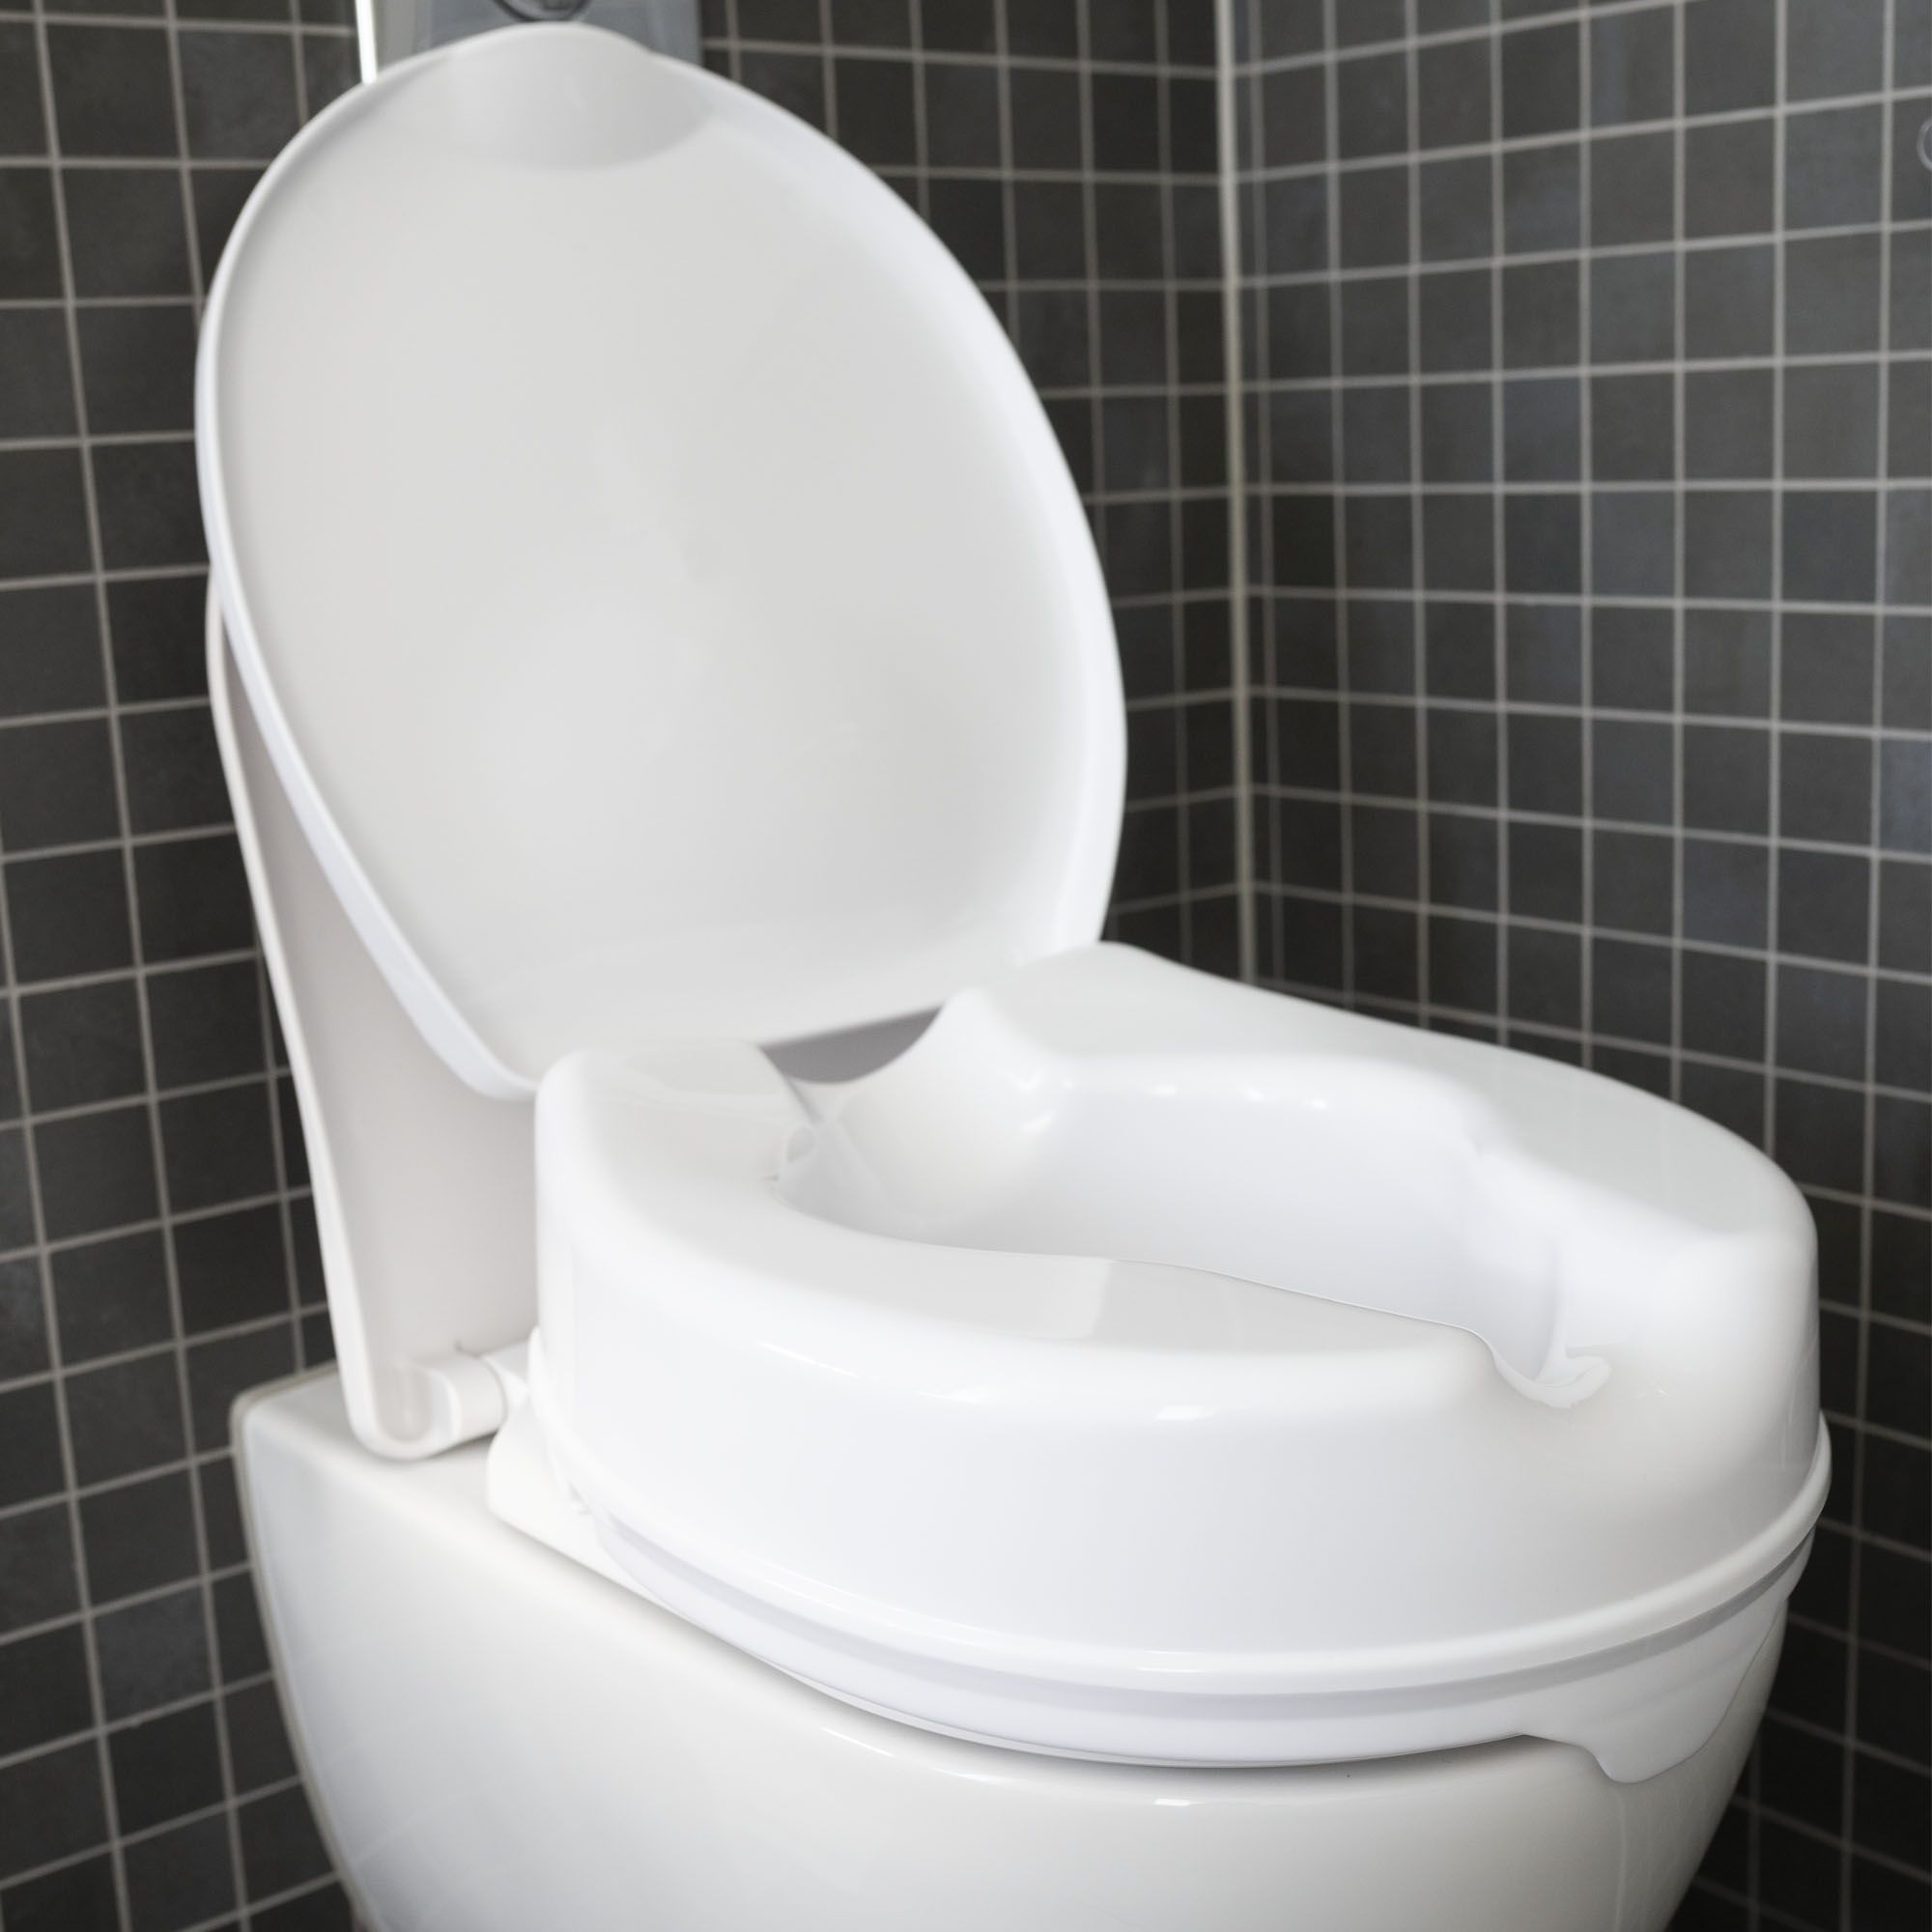 dunimed raised toilet seat mounted on toilet